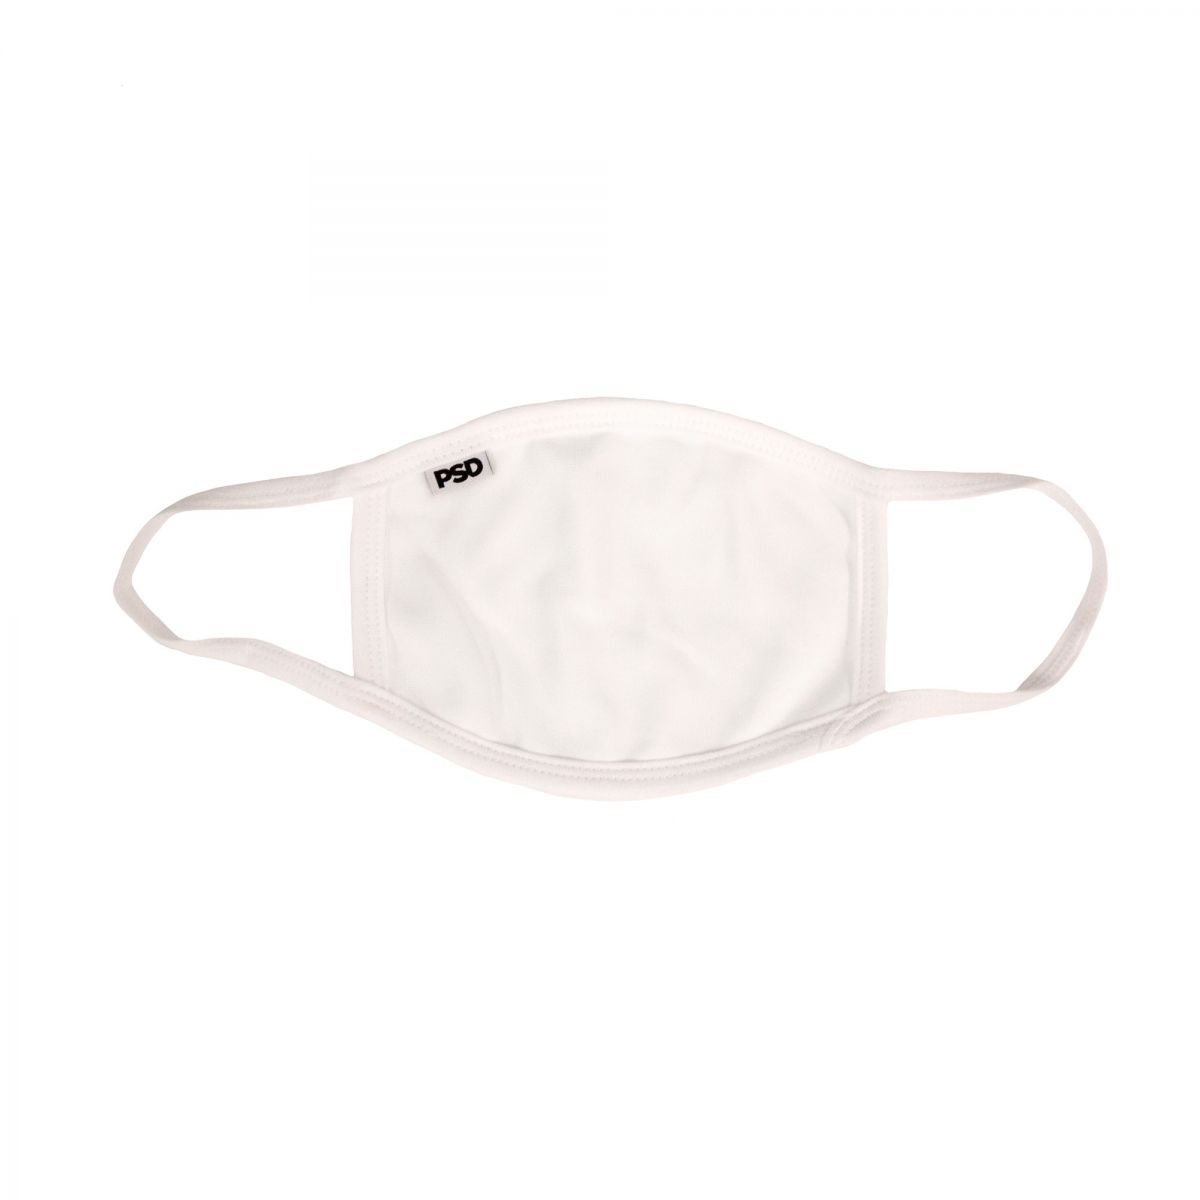 PSD UNDERWEAR Basic White Face Mask 32051041-WHT - Karmaloop